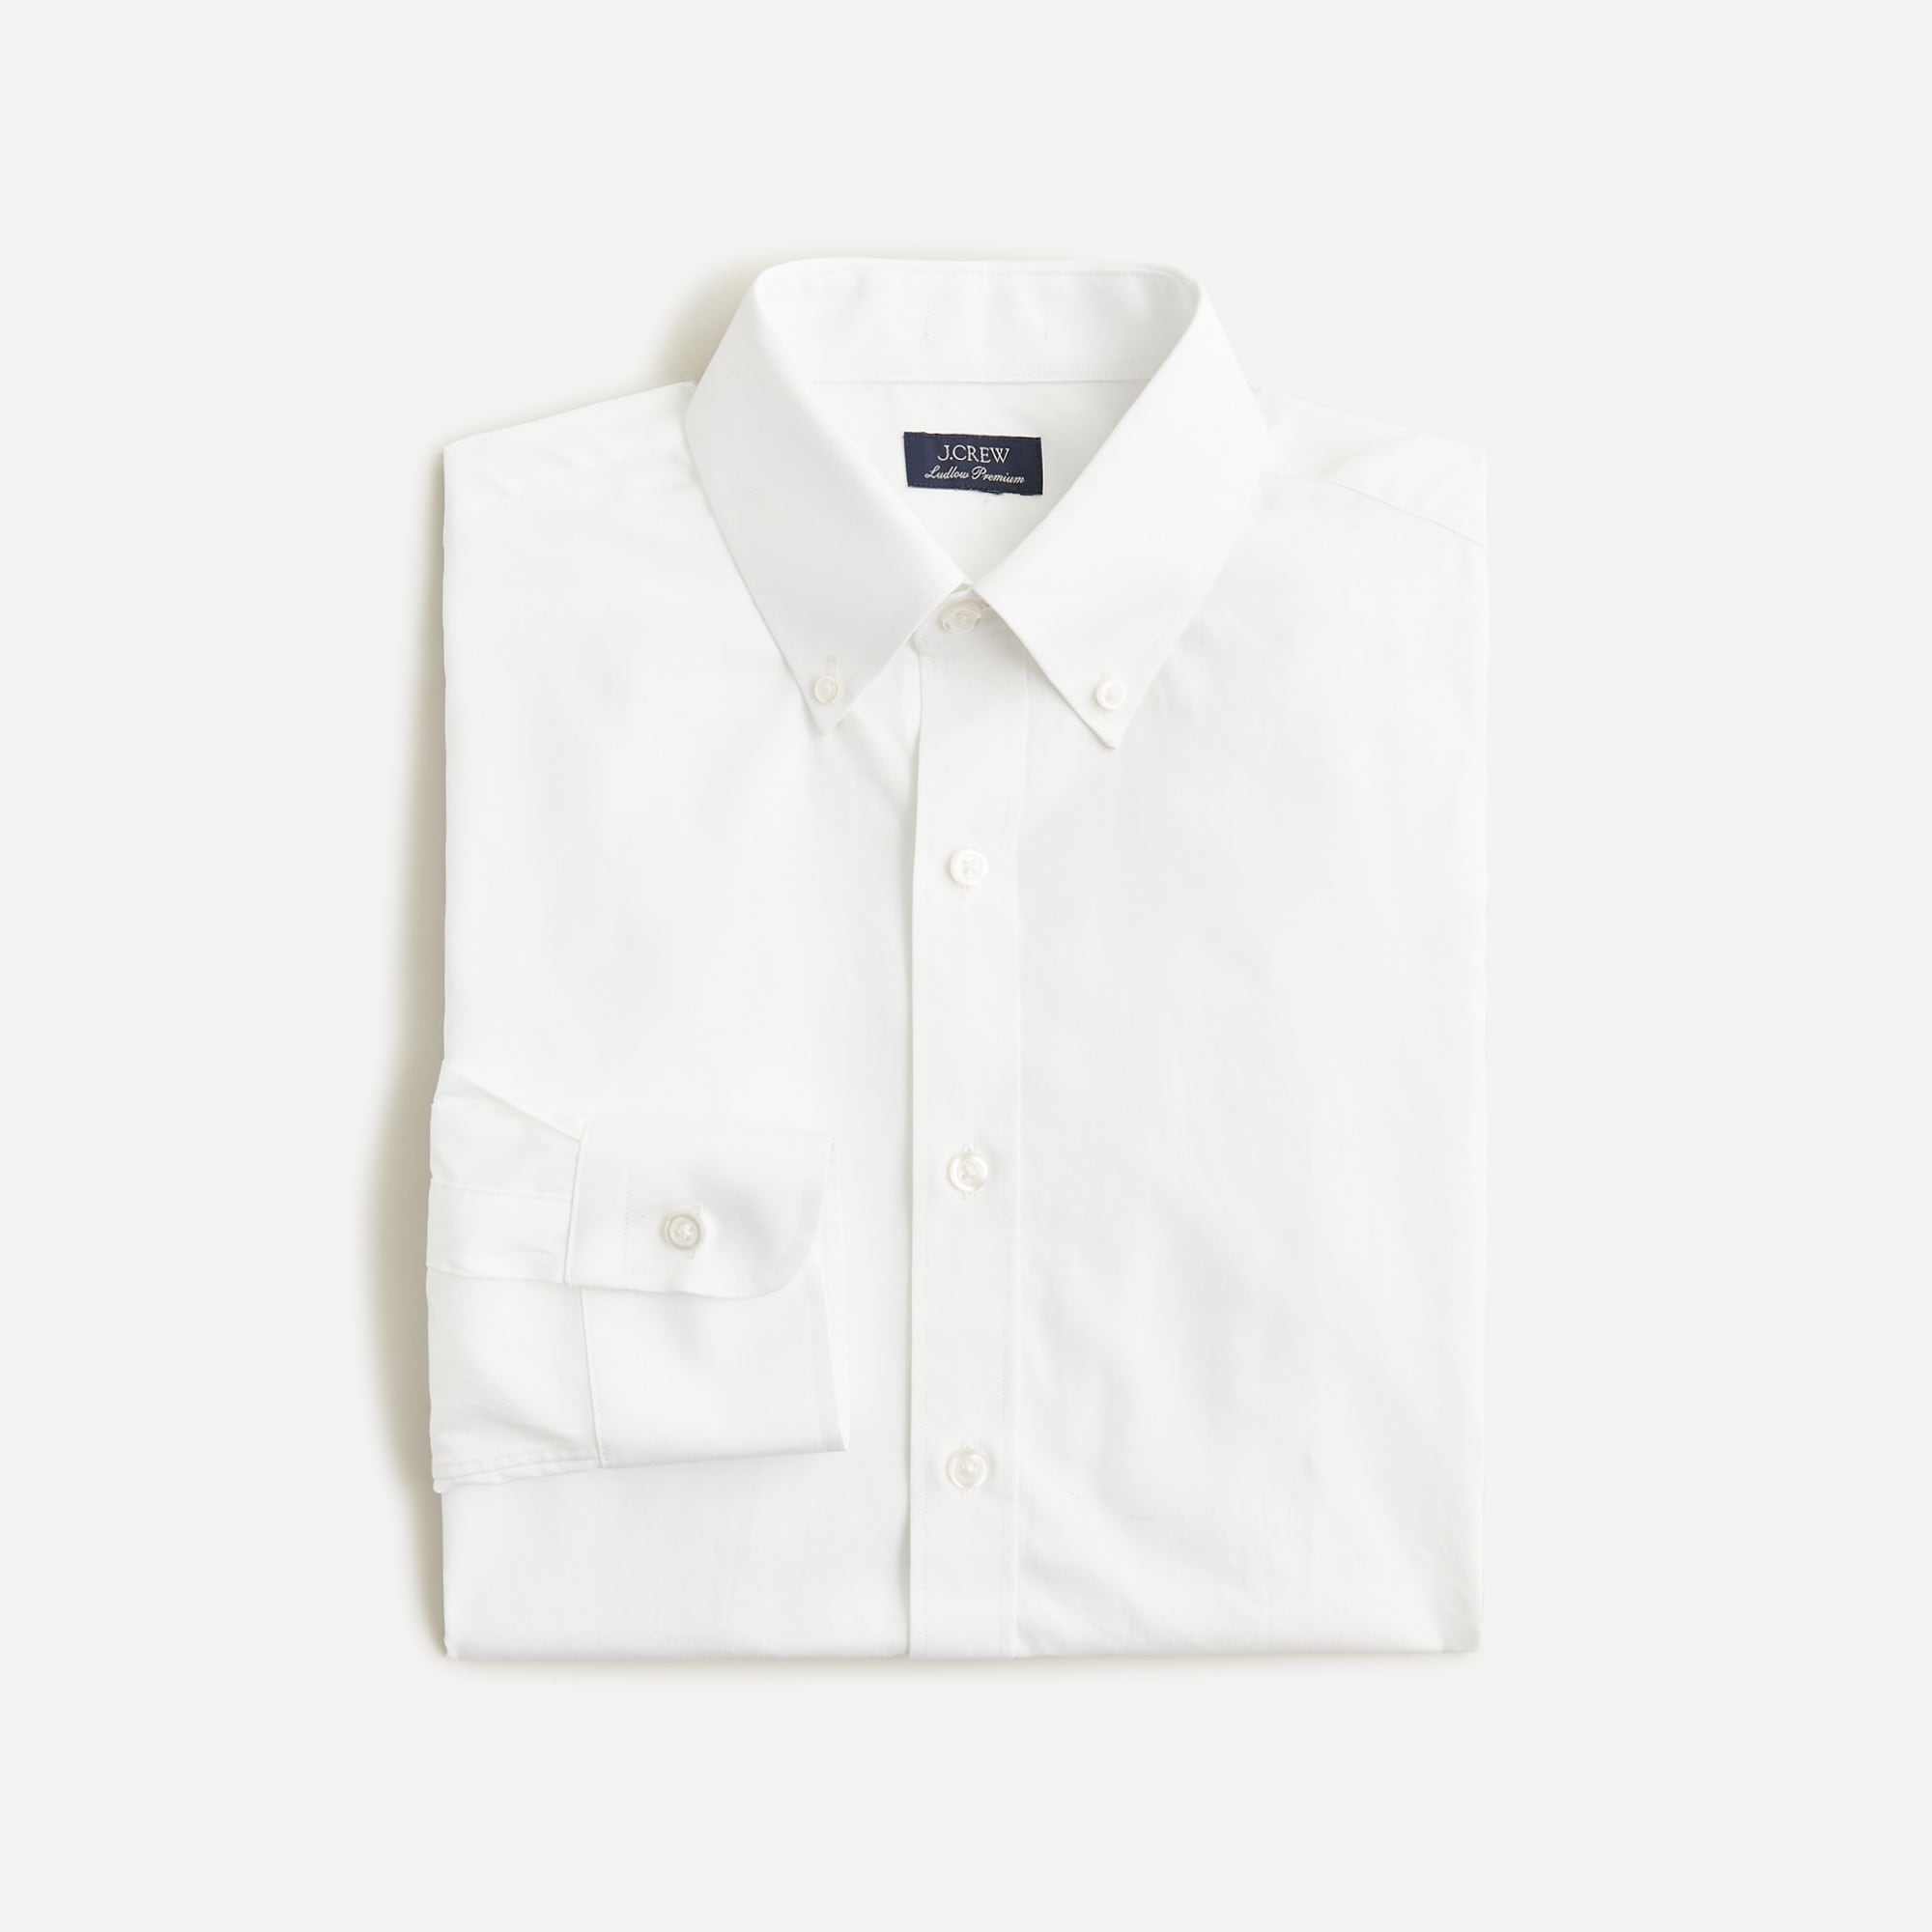  Ludlow Premium fine cotton dress shirt with button-down collar